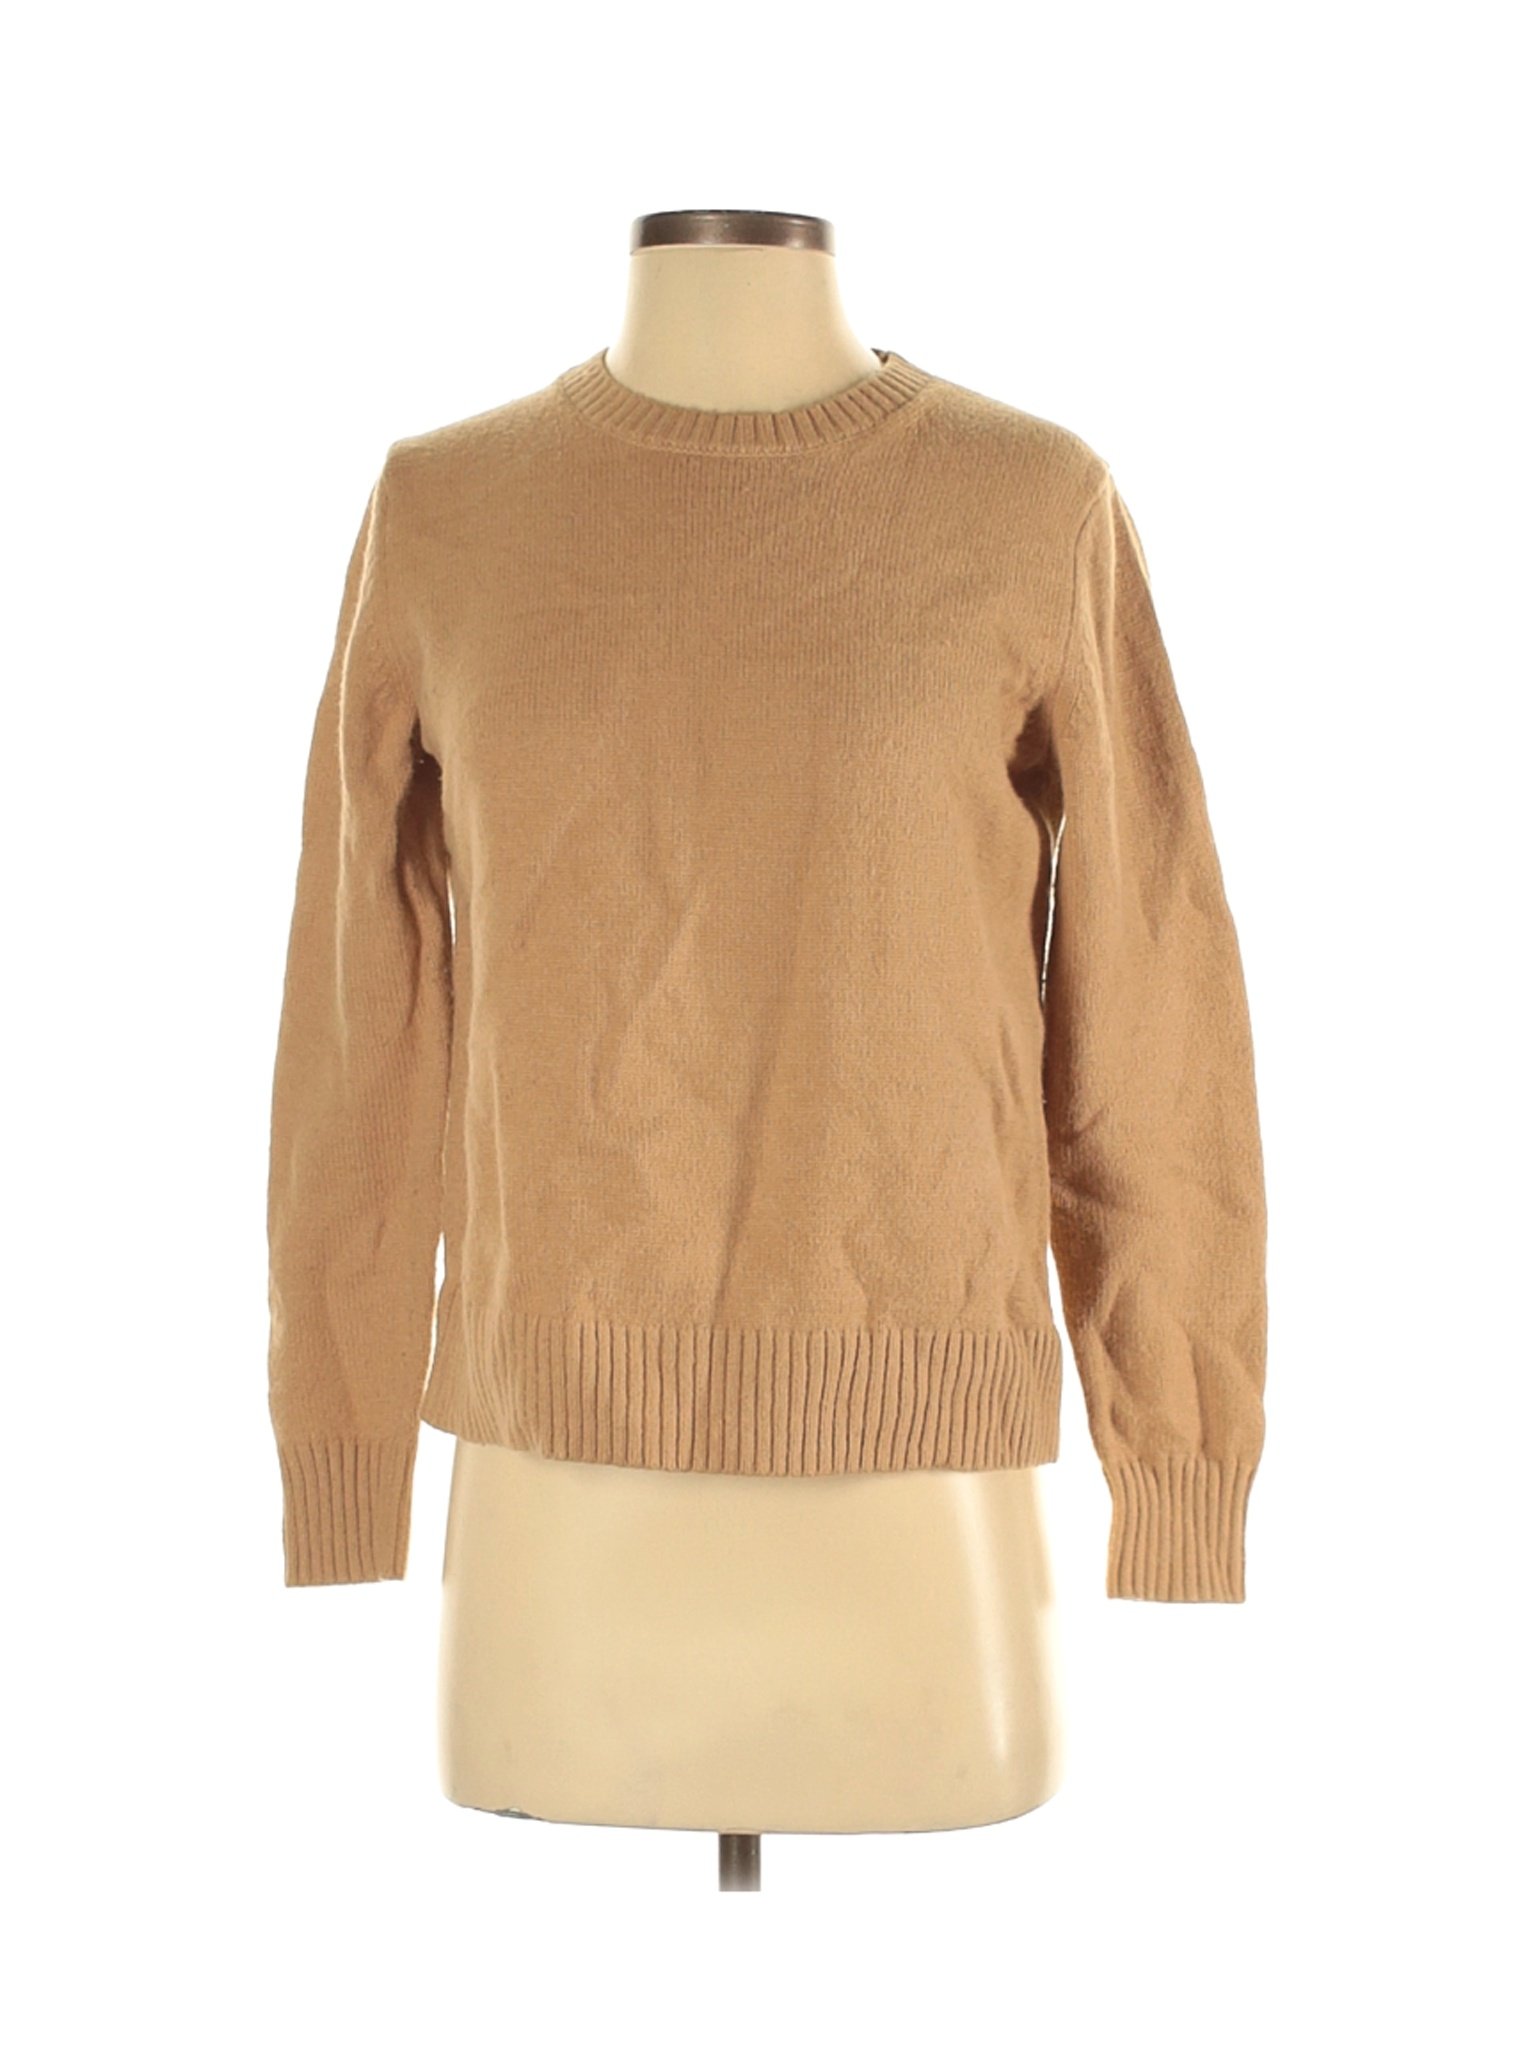 Banana Republic Women Brown Pullover Sweater S | eBay